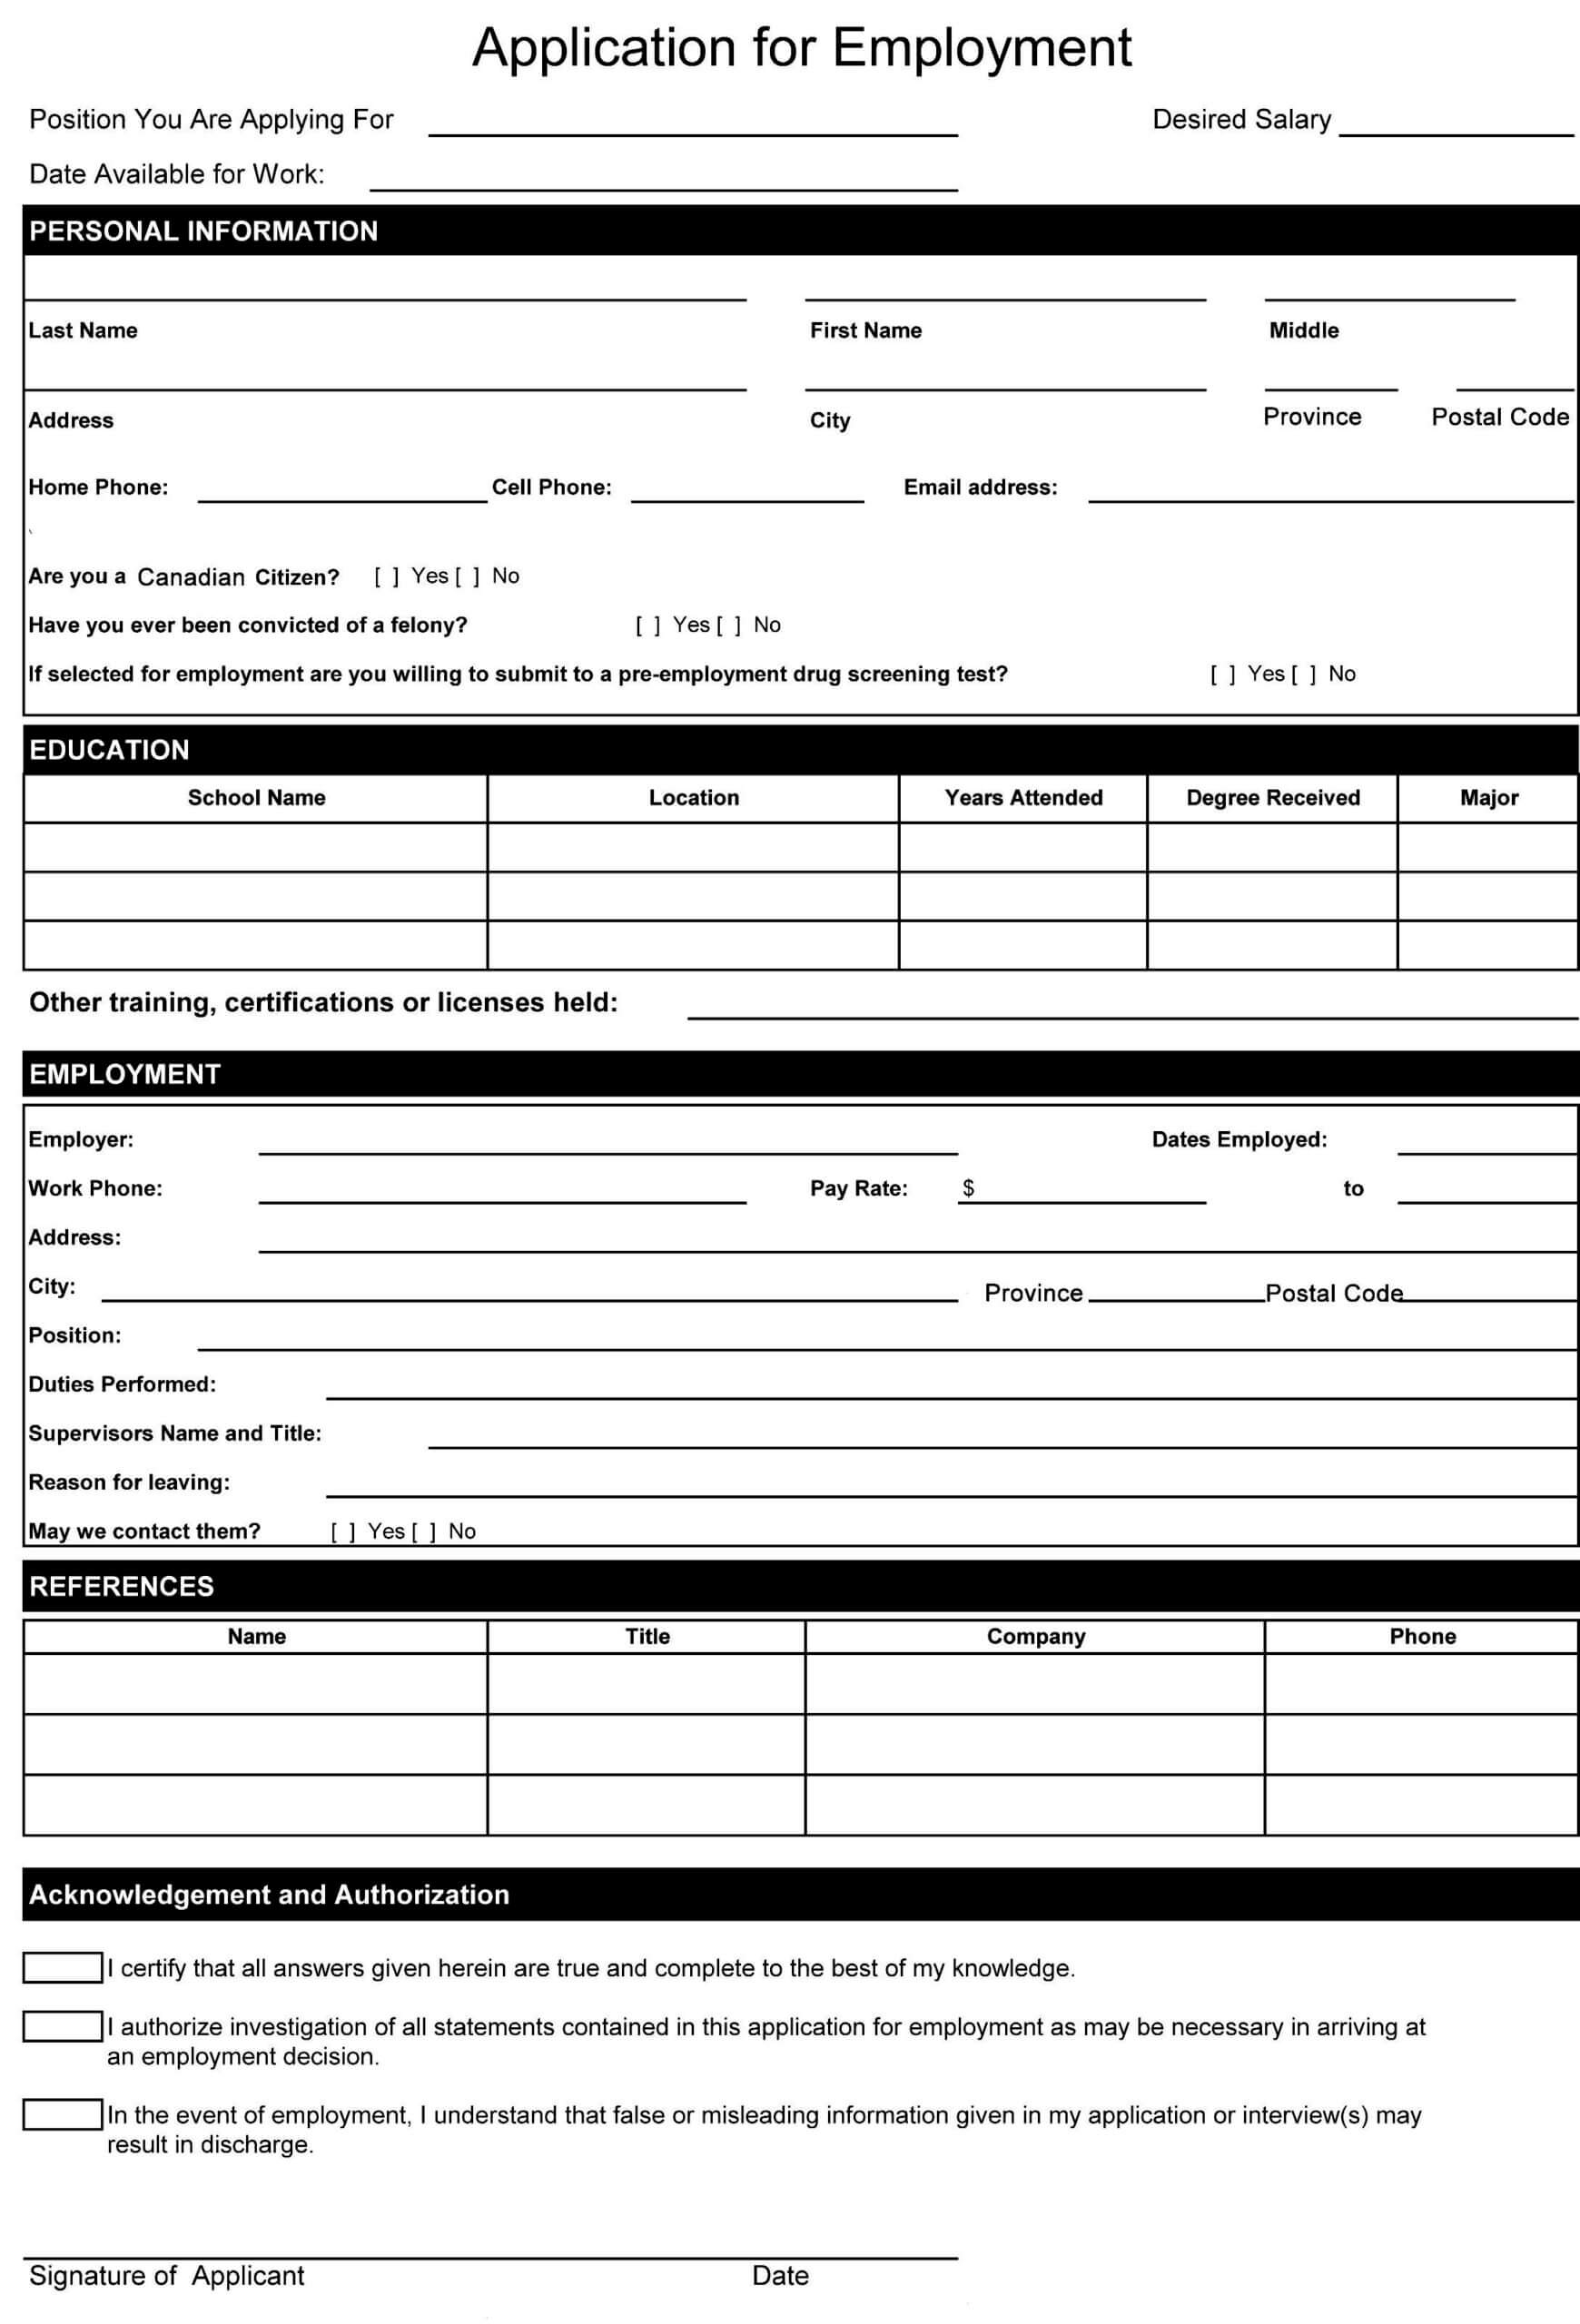 Resume Format Word Document | Job Application Form Regarding Job Application Template Word Document